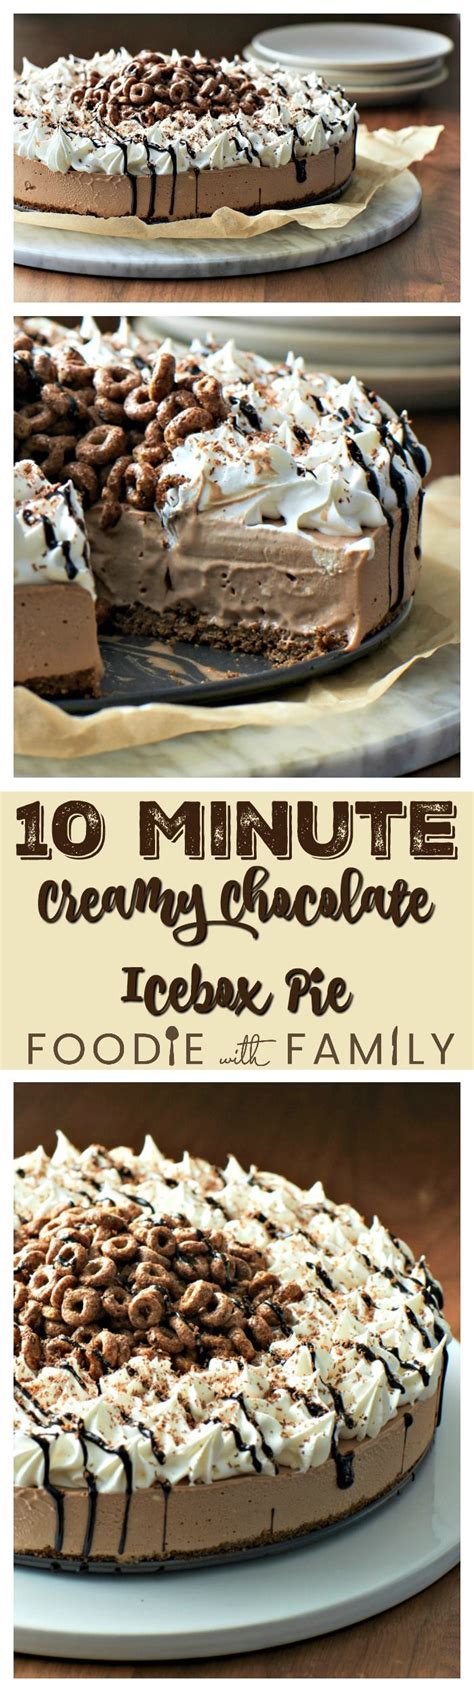 10 Minute Creamy Chocolate Icebox Pie Is As Impressive Tasting As It Is